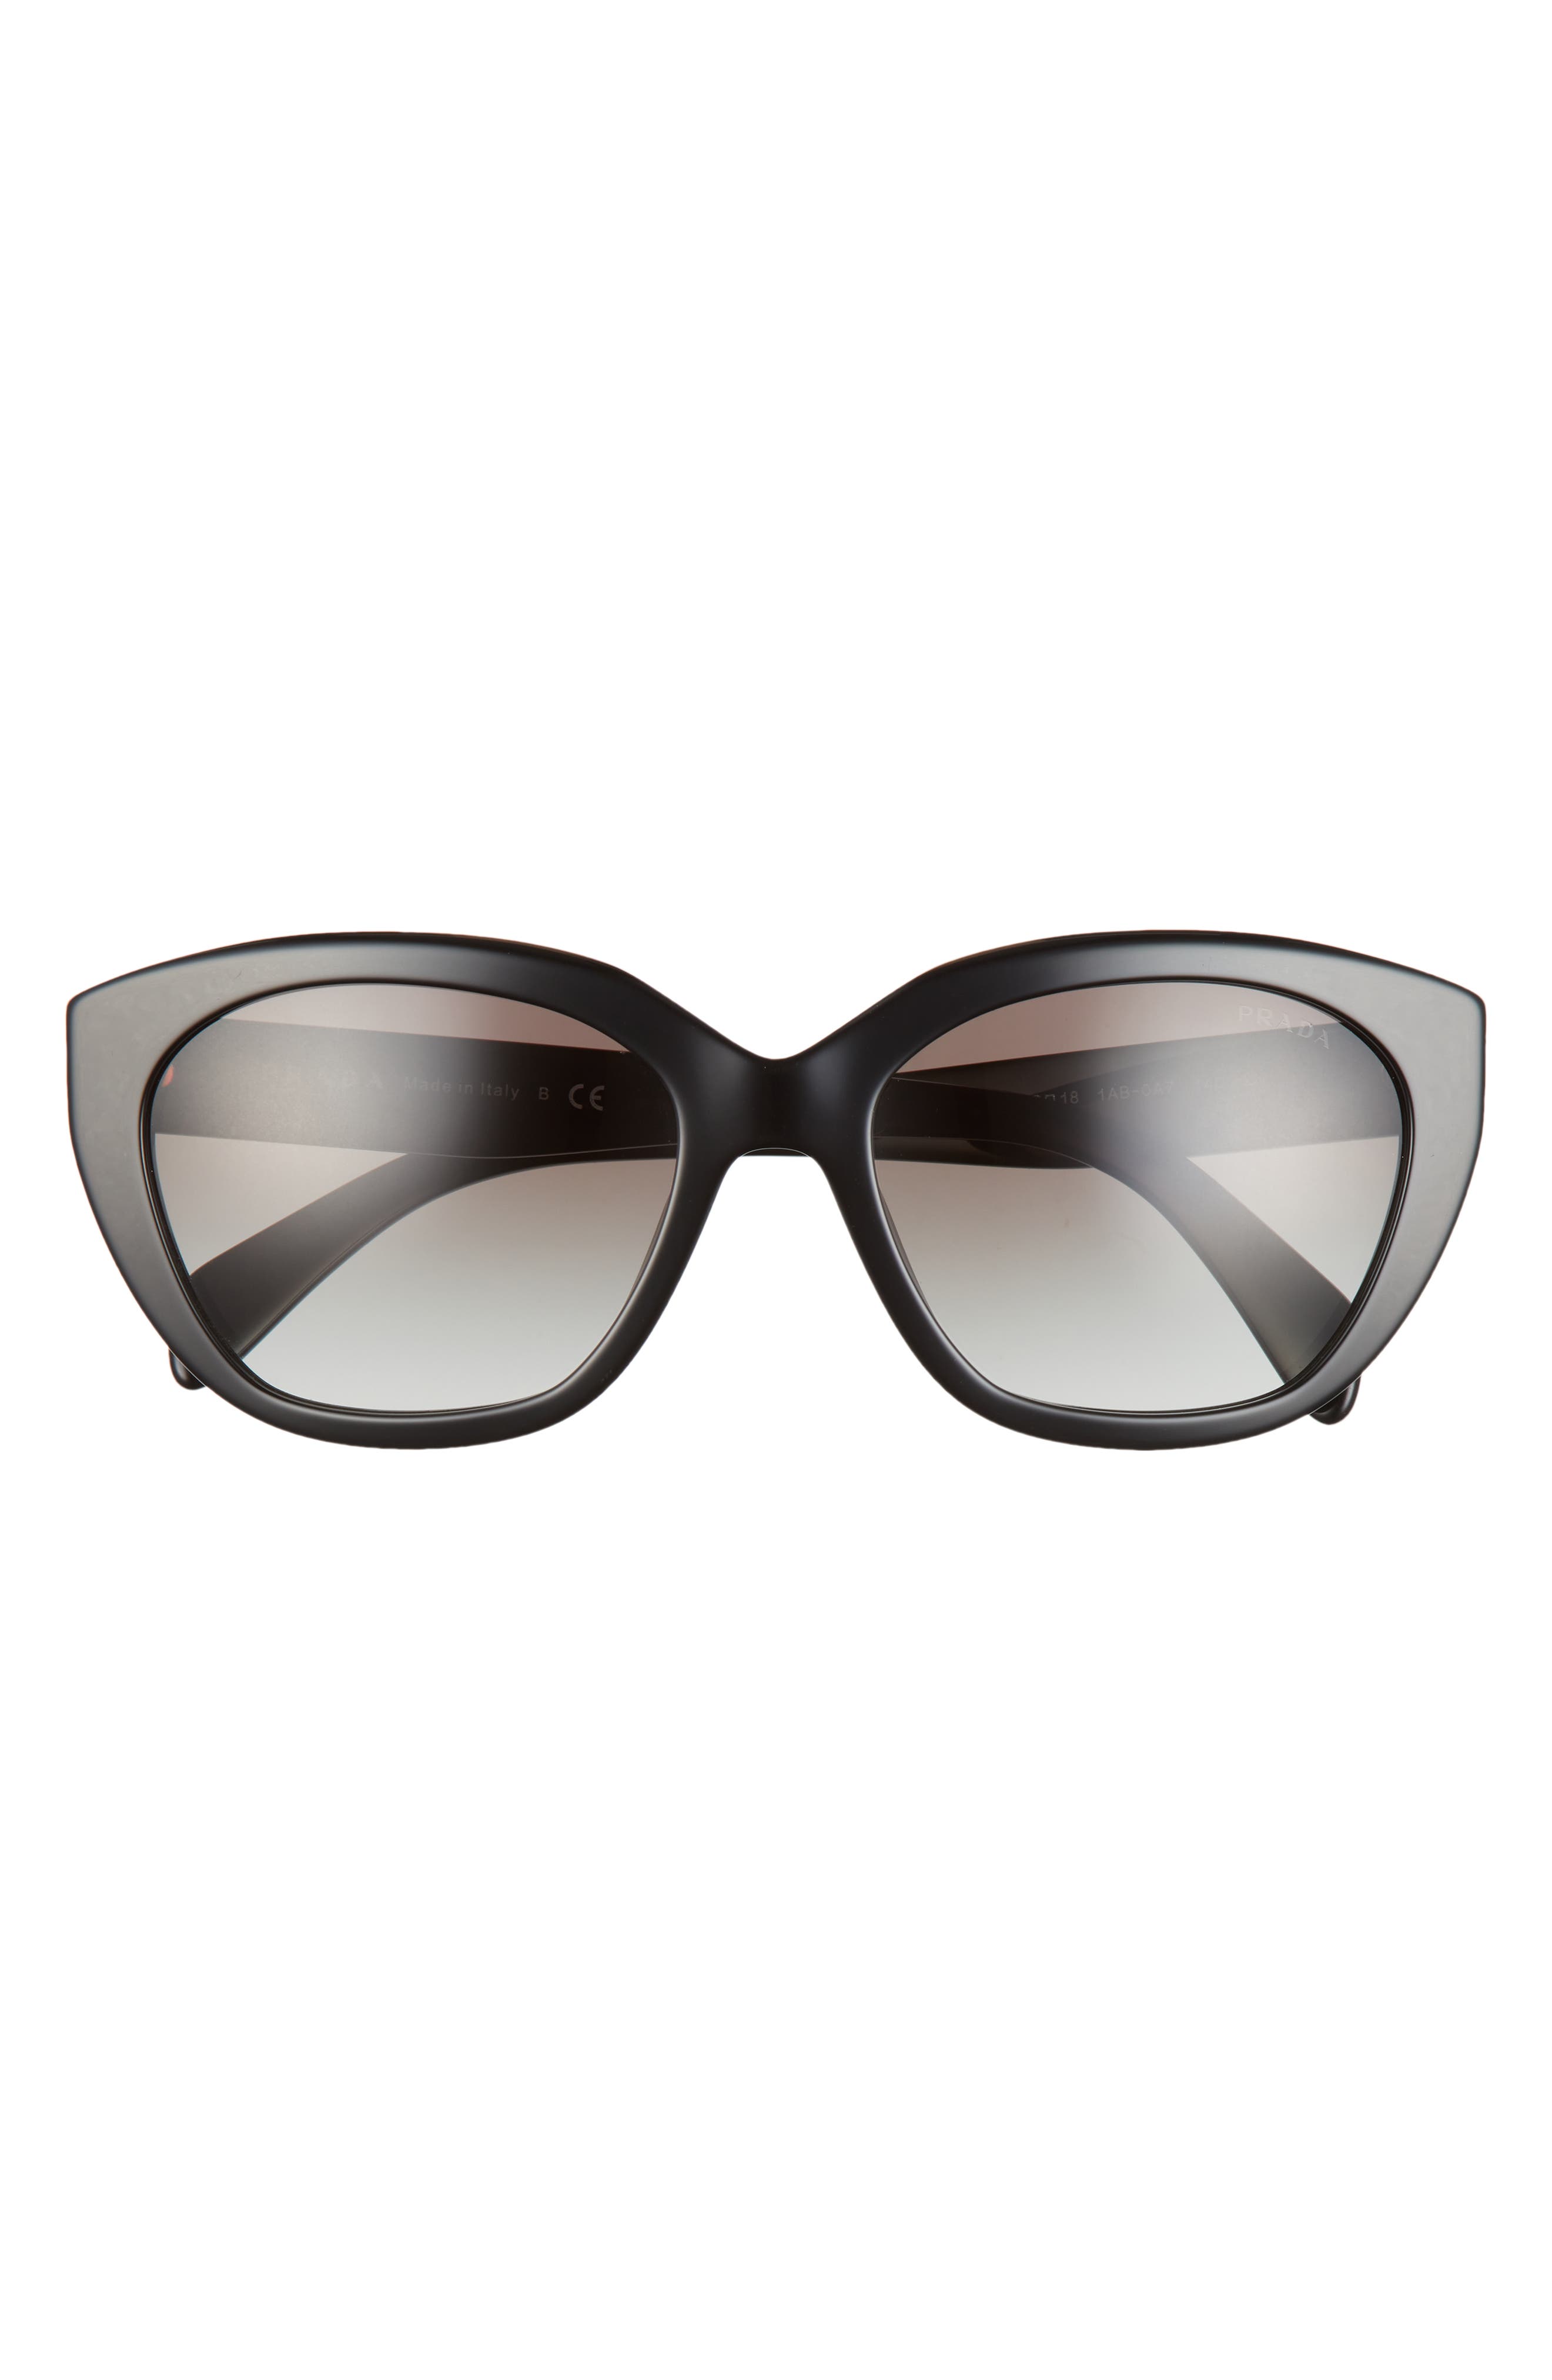 Prada 56mm Gradient Cat Eye Sunglasses in Black/Grey Gradient at Nordstrom